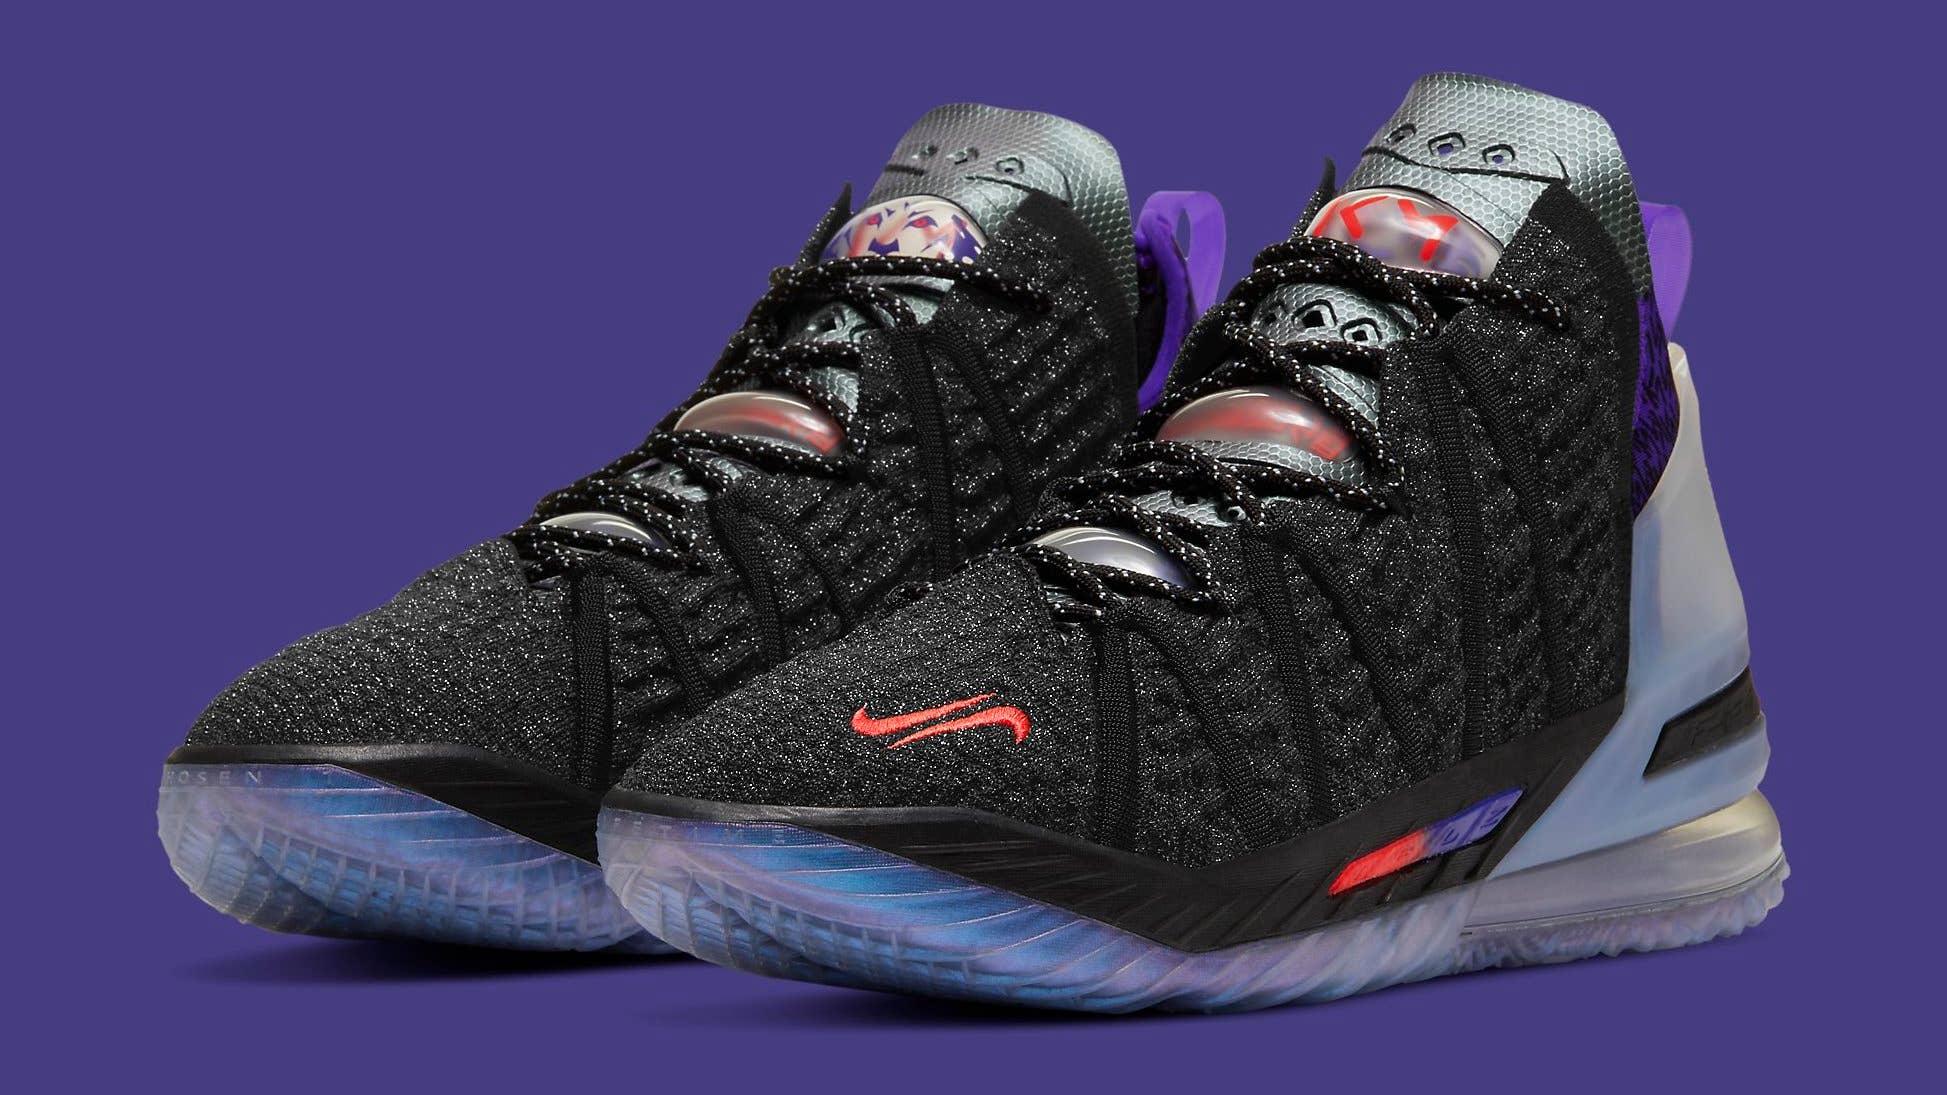 Nike LeBron 18 Mens Basketball Shoe Purple Black Free Shipping